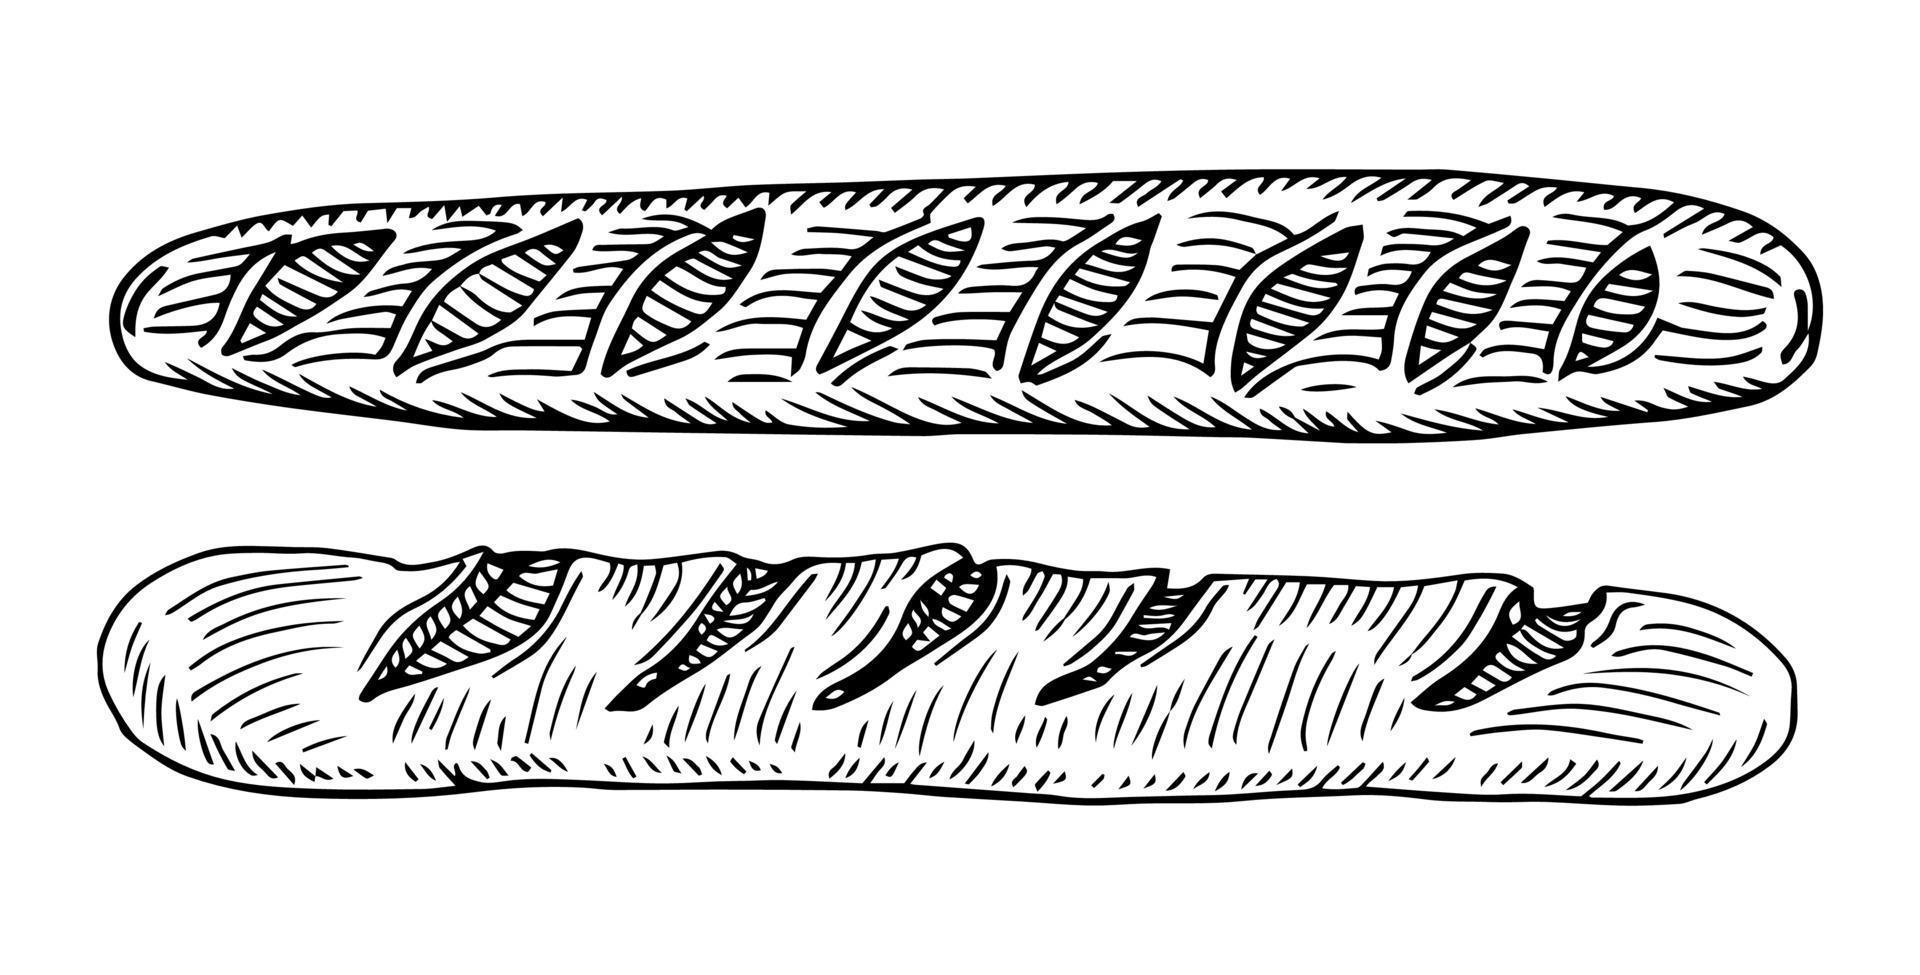 vektor handritad doodle skiss baguette bröd isolerad på vit bakgrund